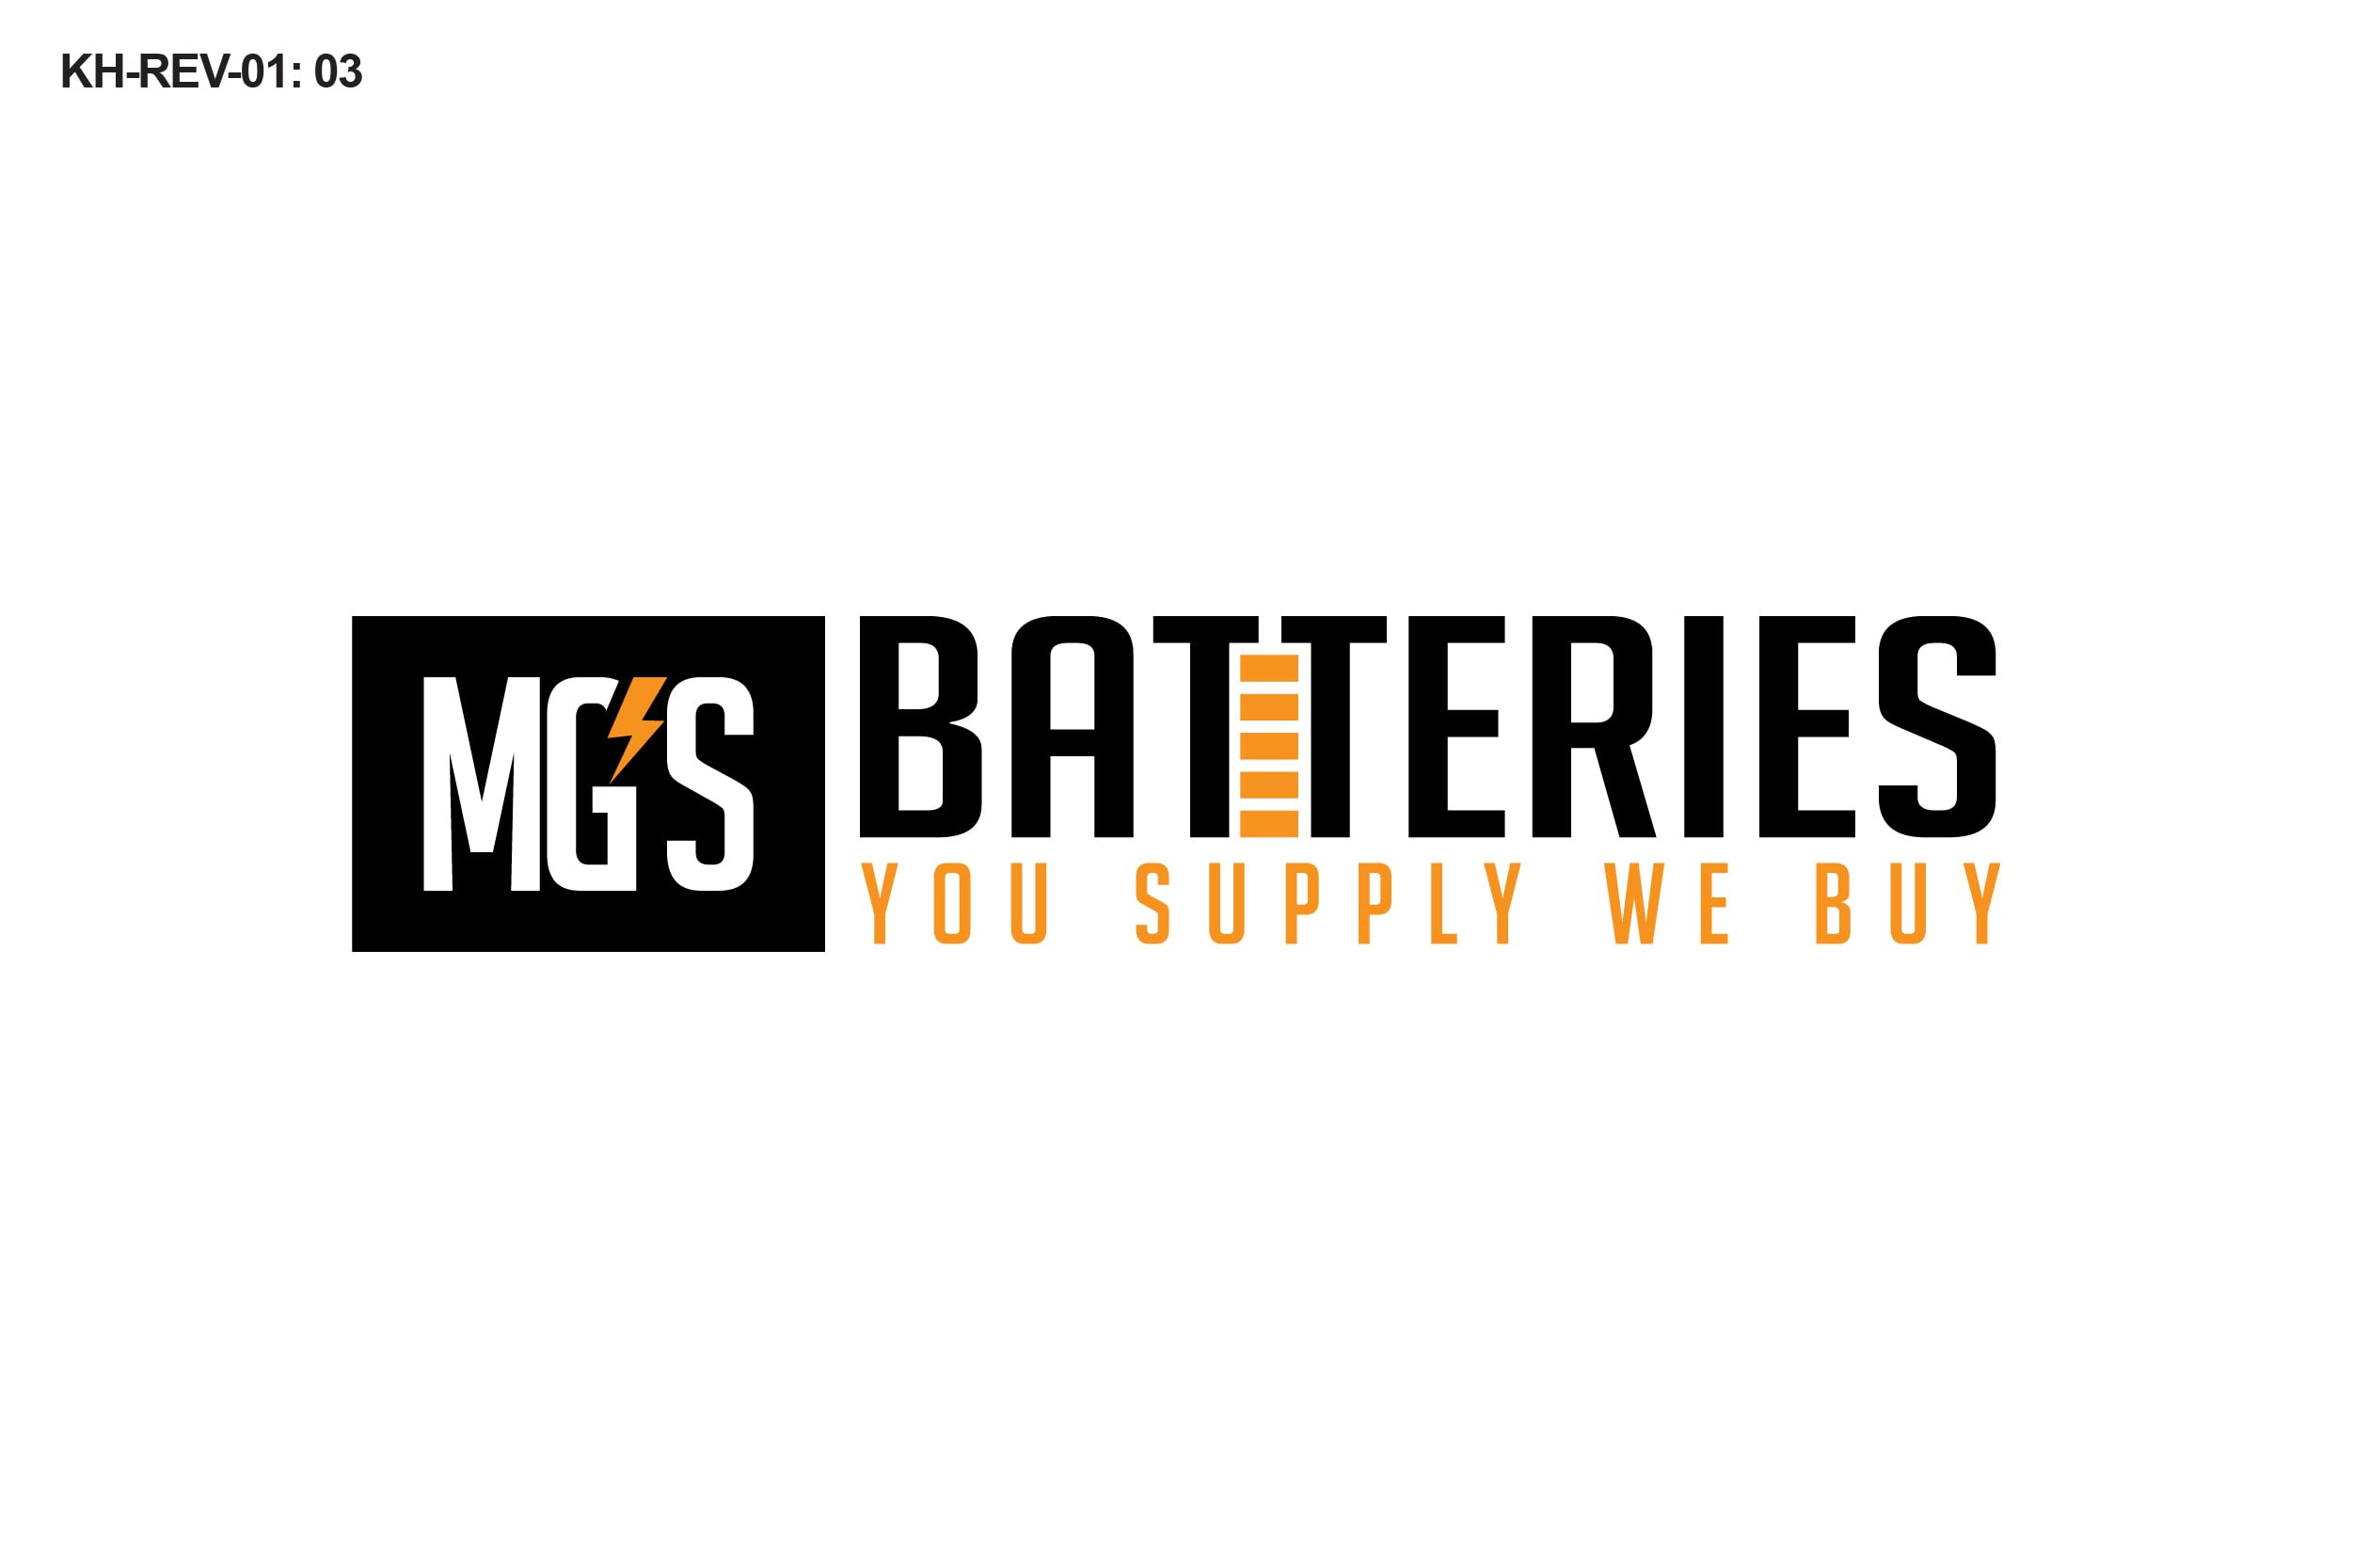 MG's Batteries